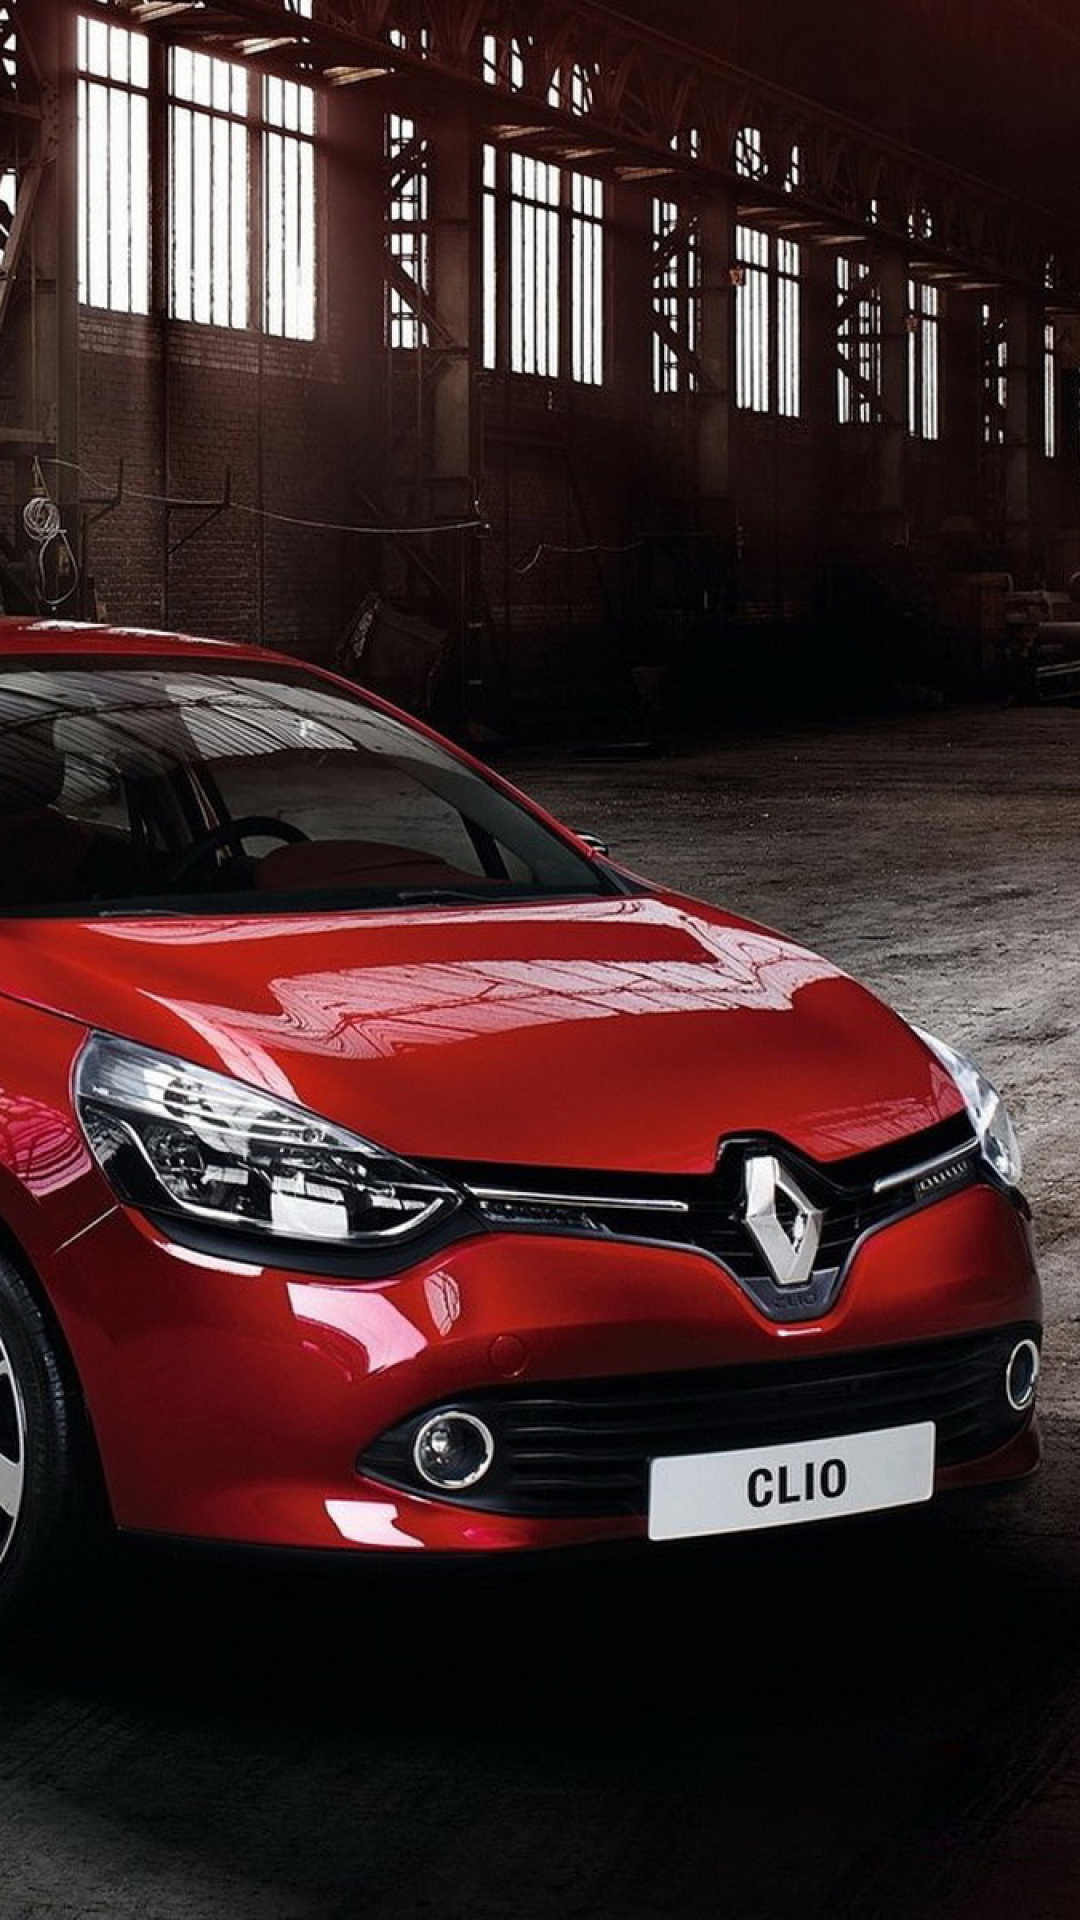 Renault Clio wallpaper 1080x1920